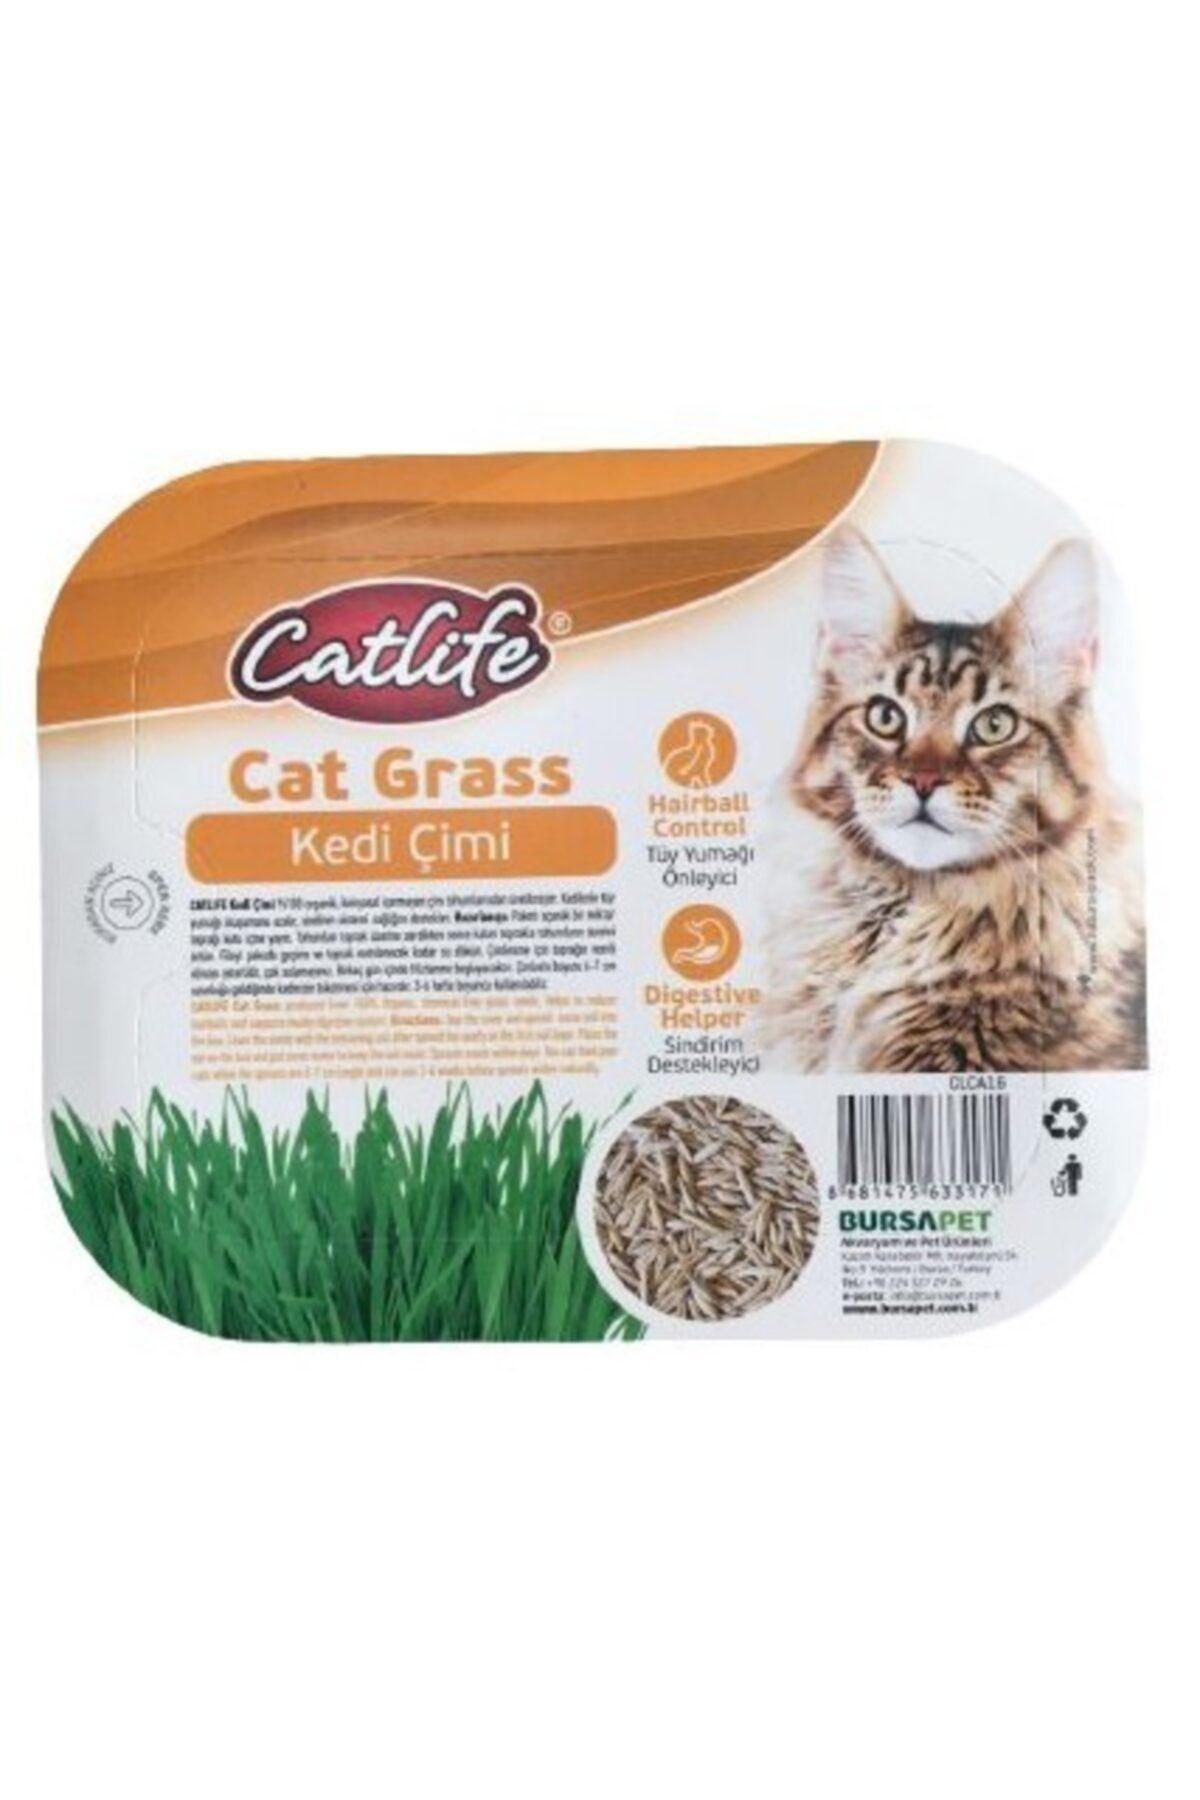 Catlife Cat Grass Kedi Çimi